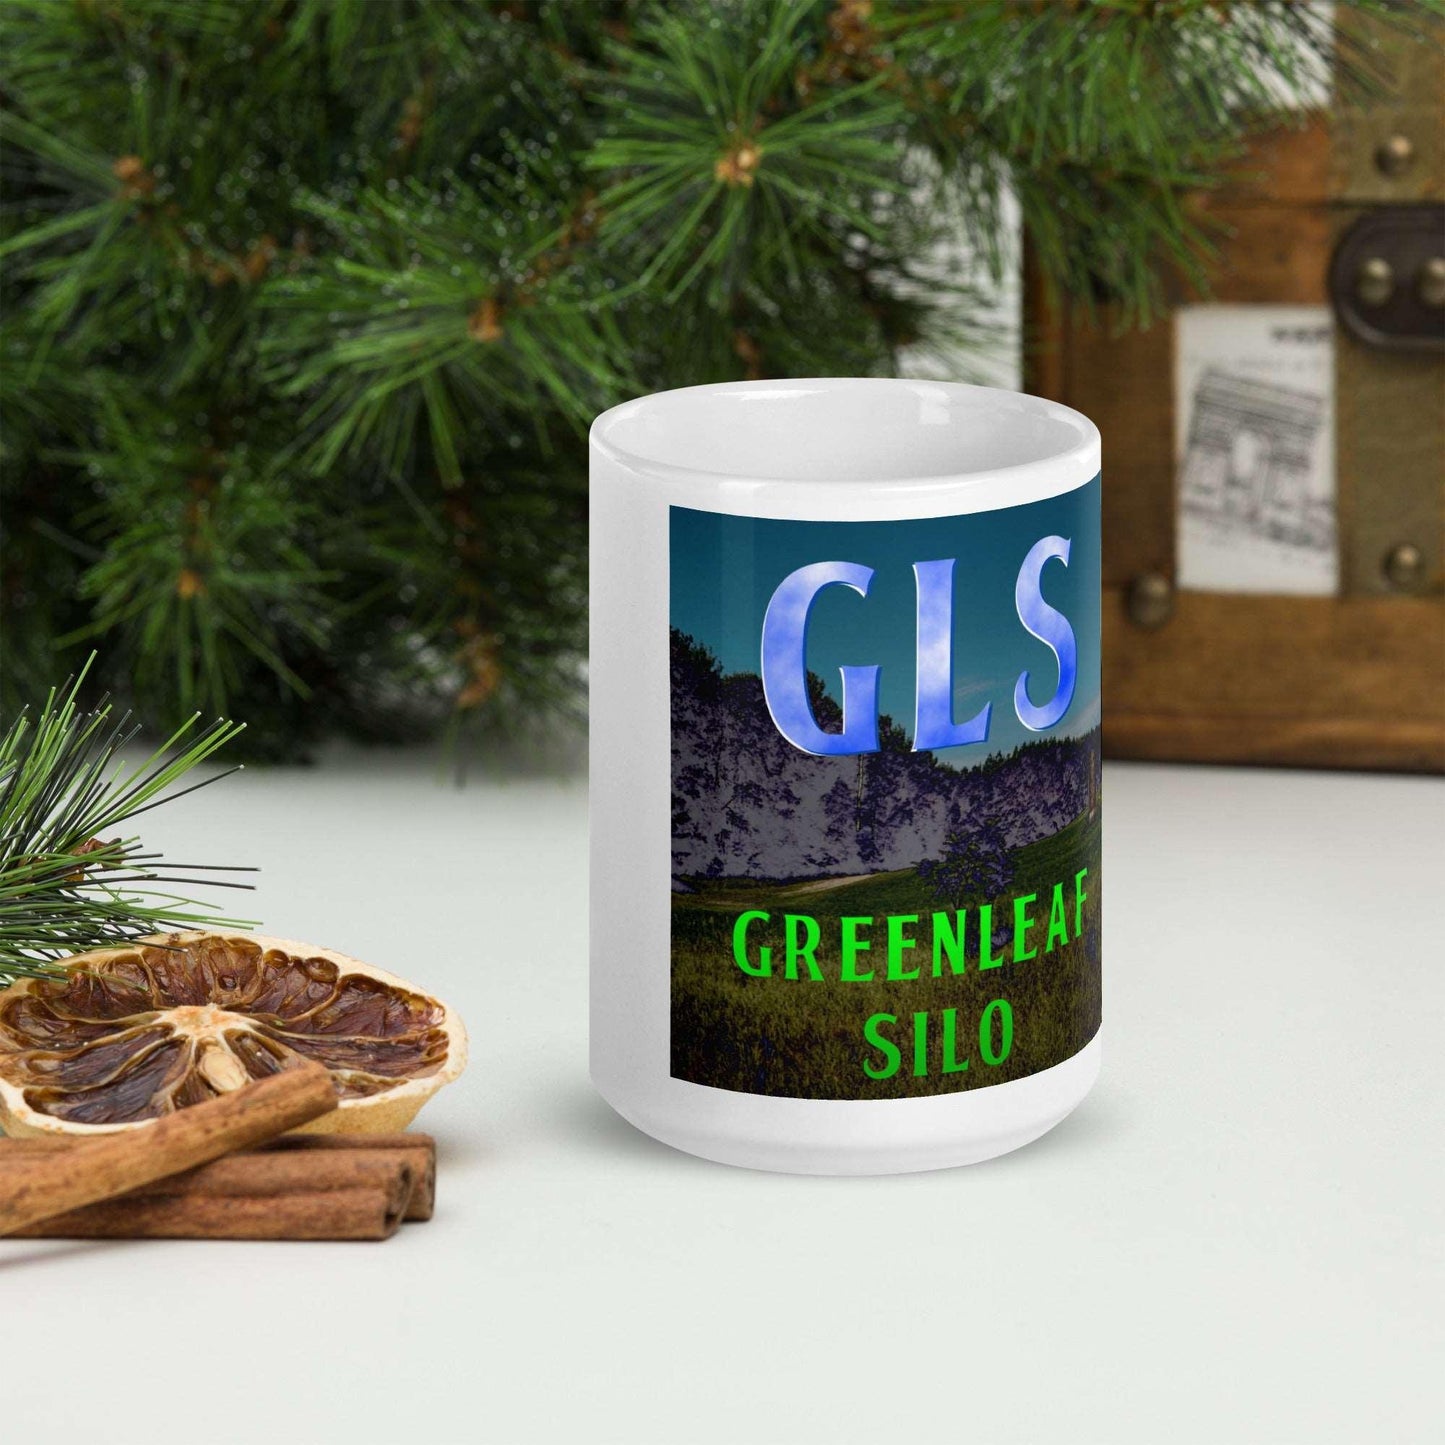 GLS Nuke GreenLeaf Silo White glossy cup / The Gliz mug - Lizard Vigilante